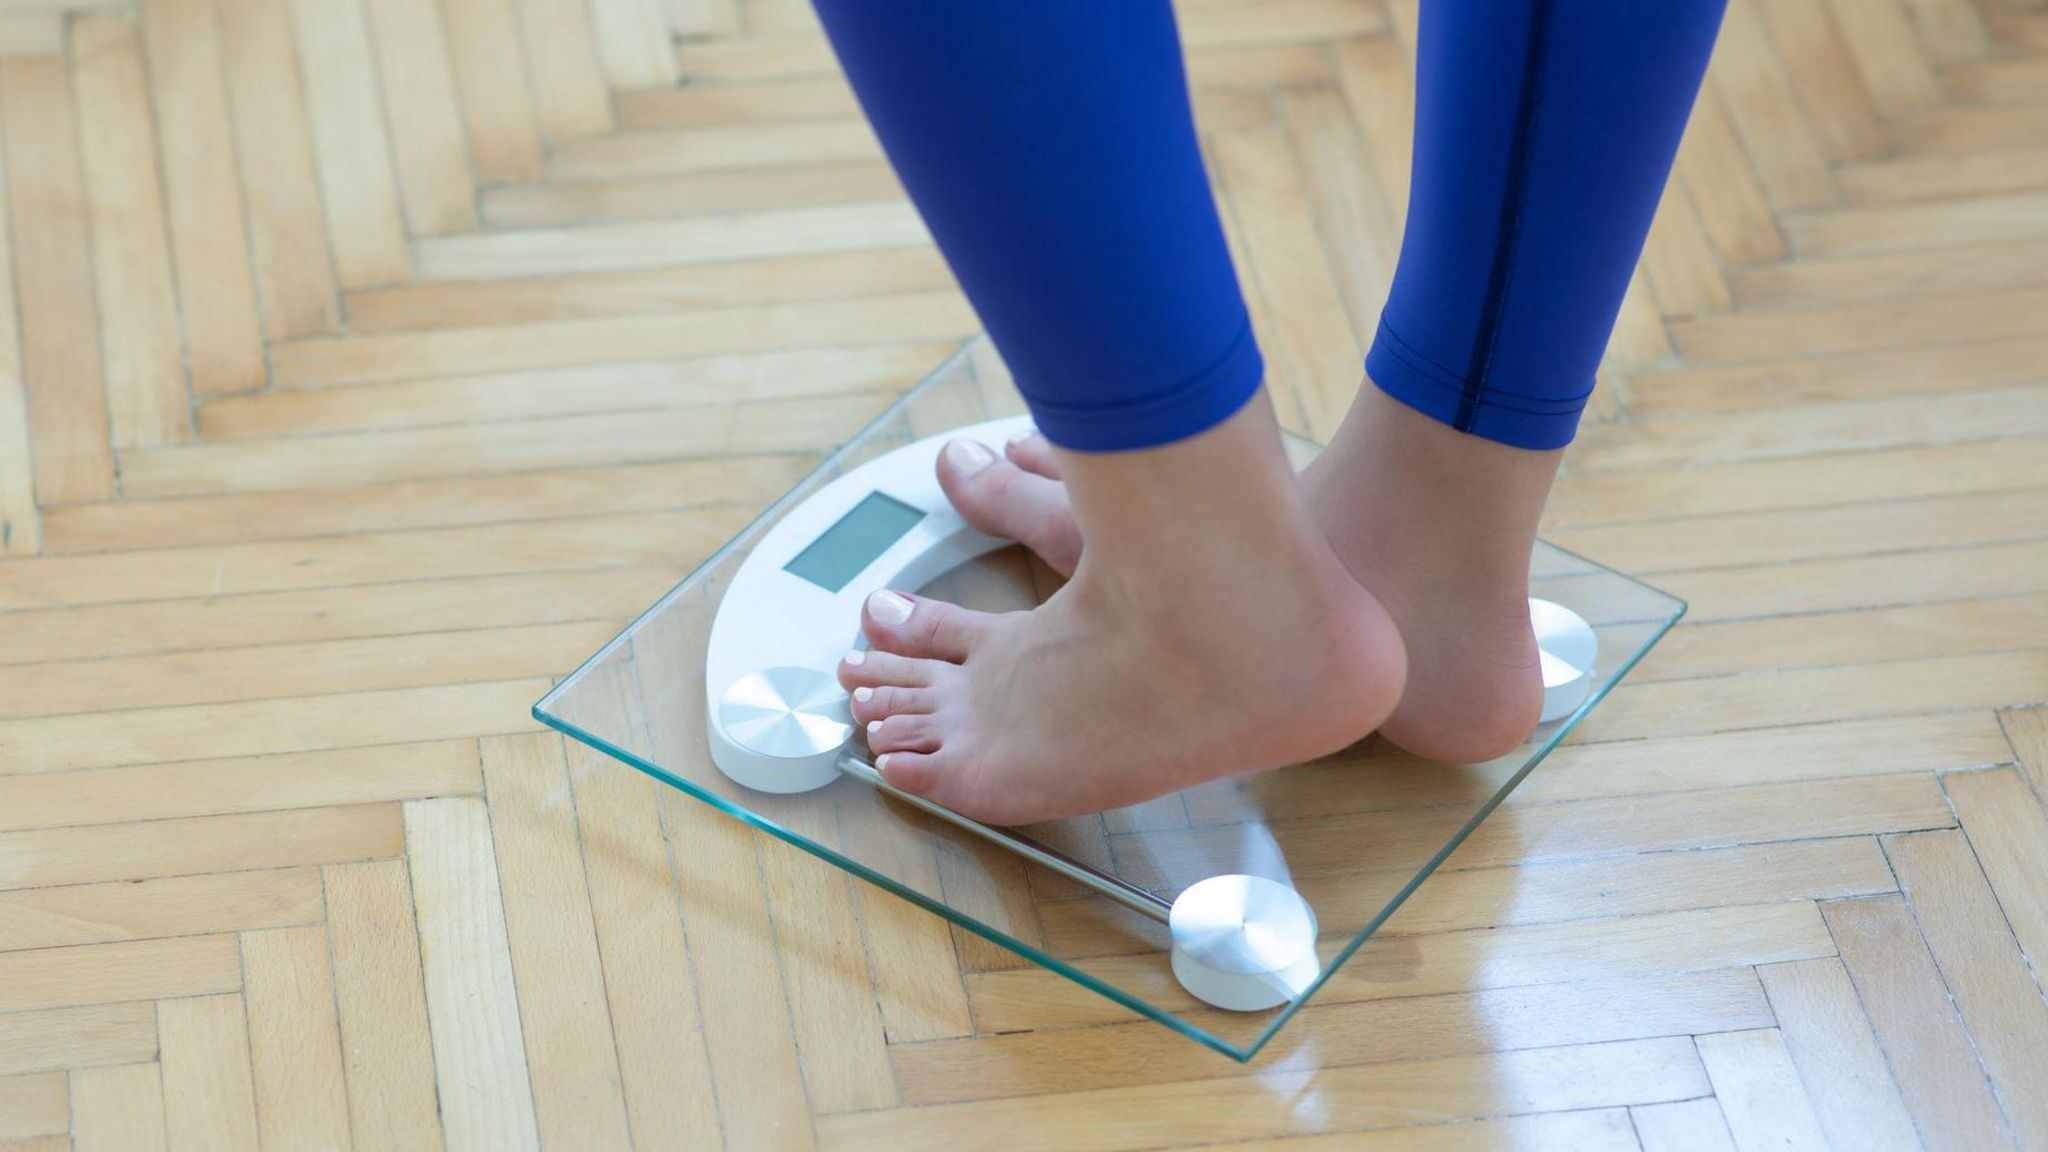 Woman weighing herself